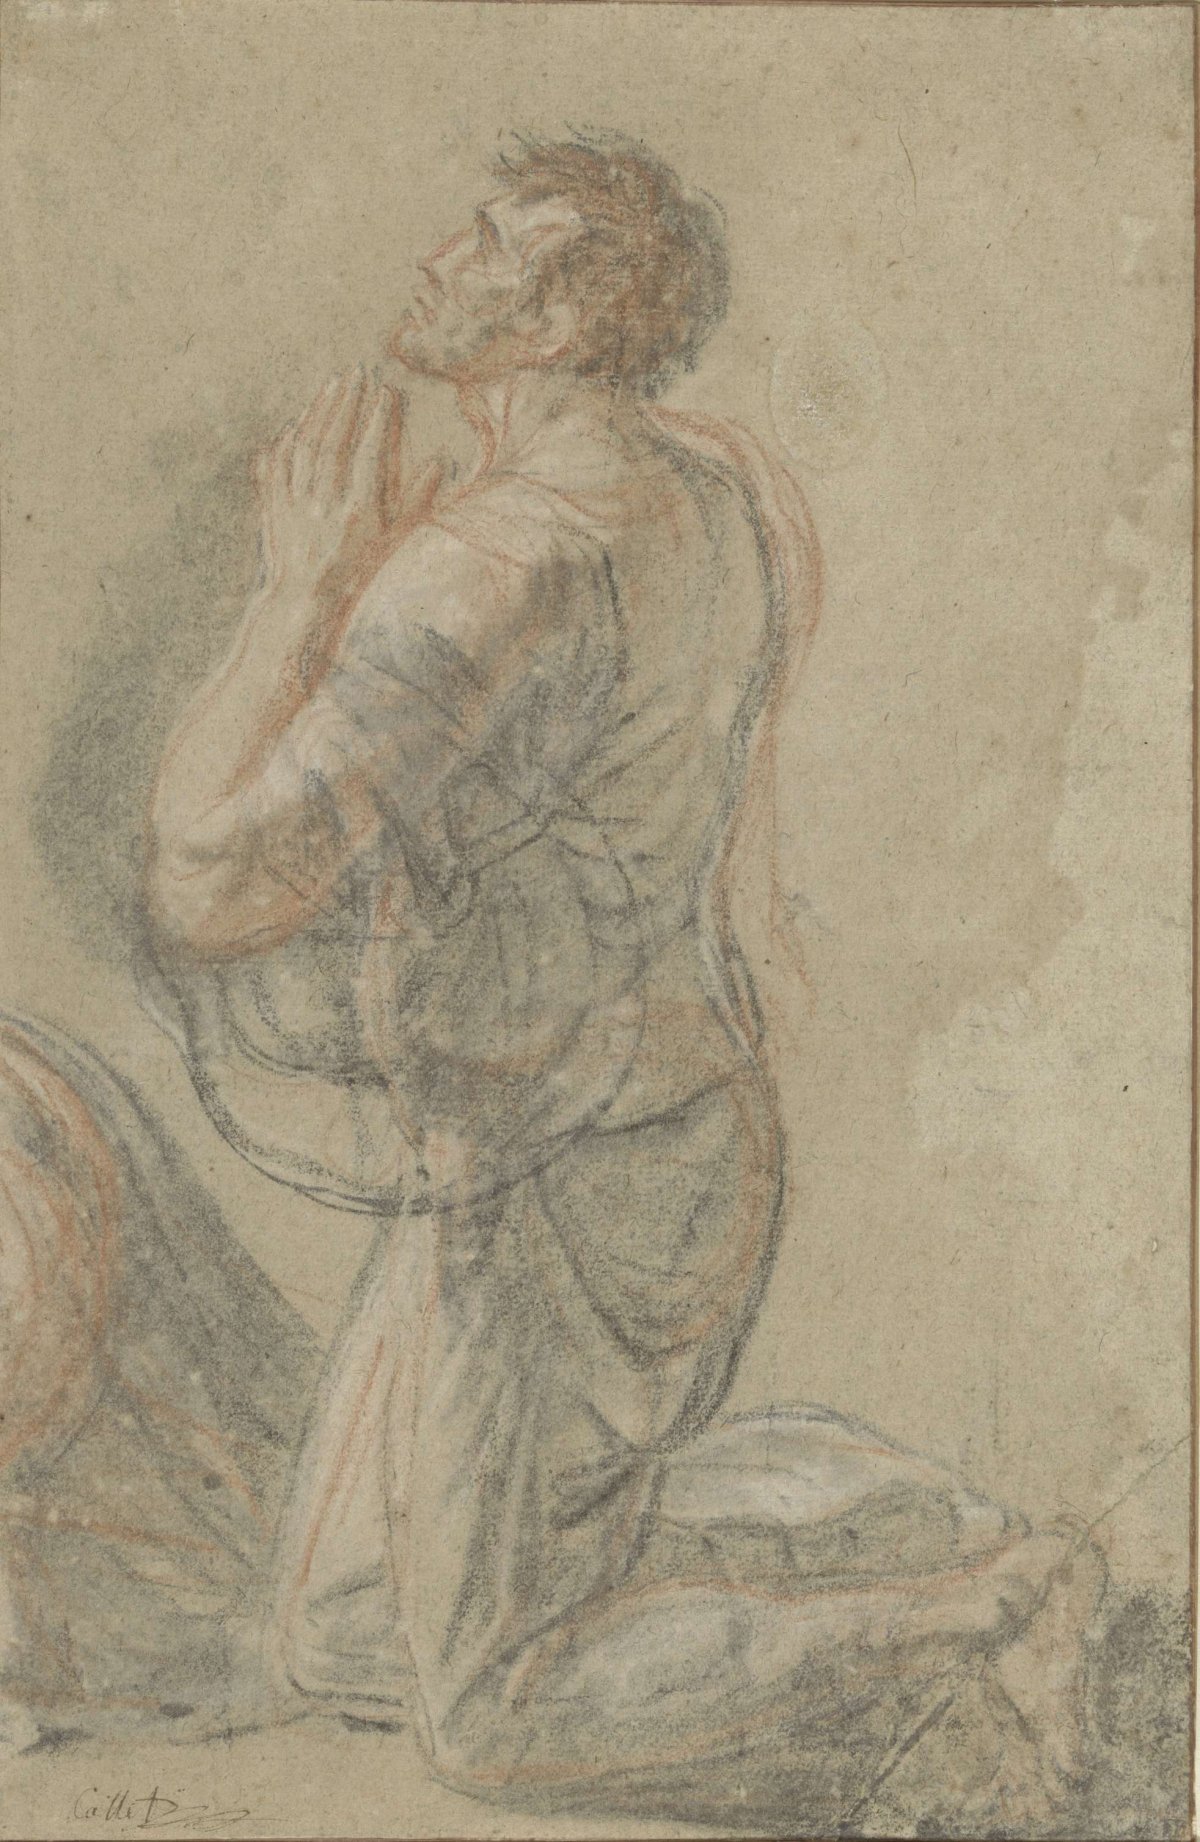 Kneeling man, seen from the side, Antoine François Callet, 1751 - 1823